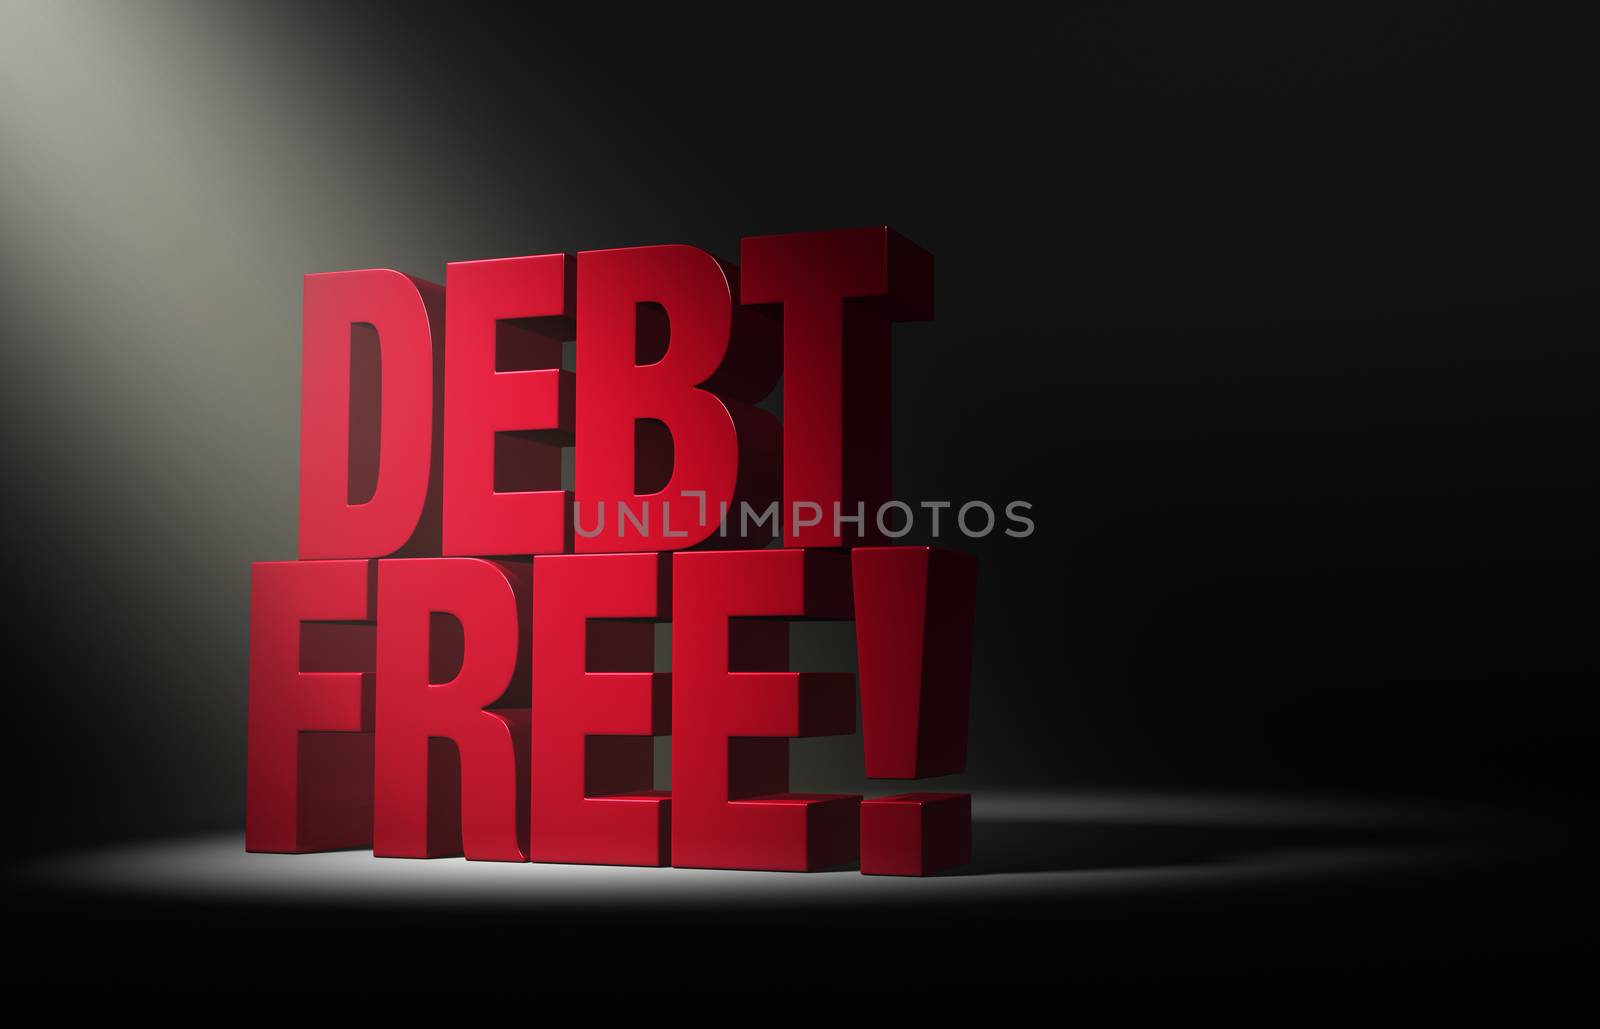 Debt Free! by Em3